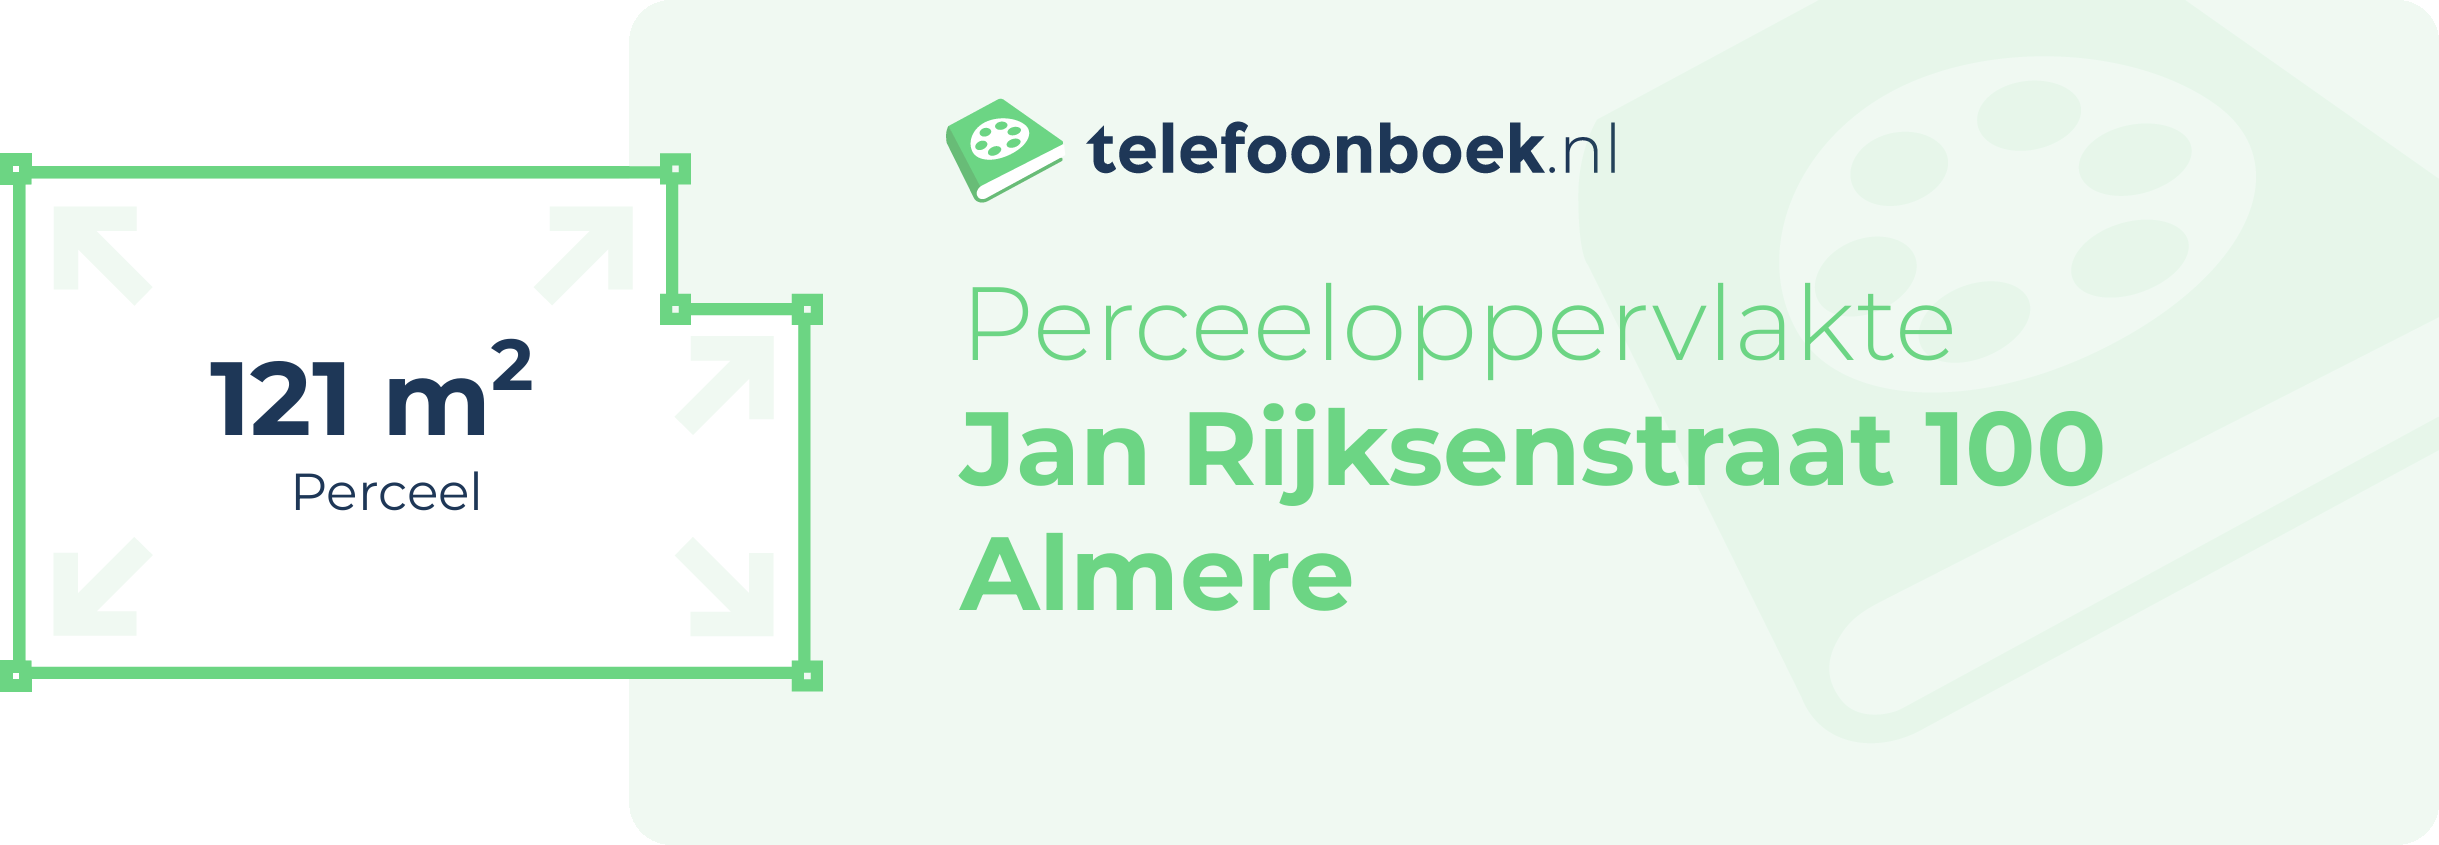 Perceeloppervlakte Jan Rijksenstraat 100 Almere